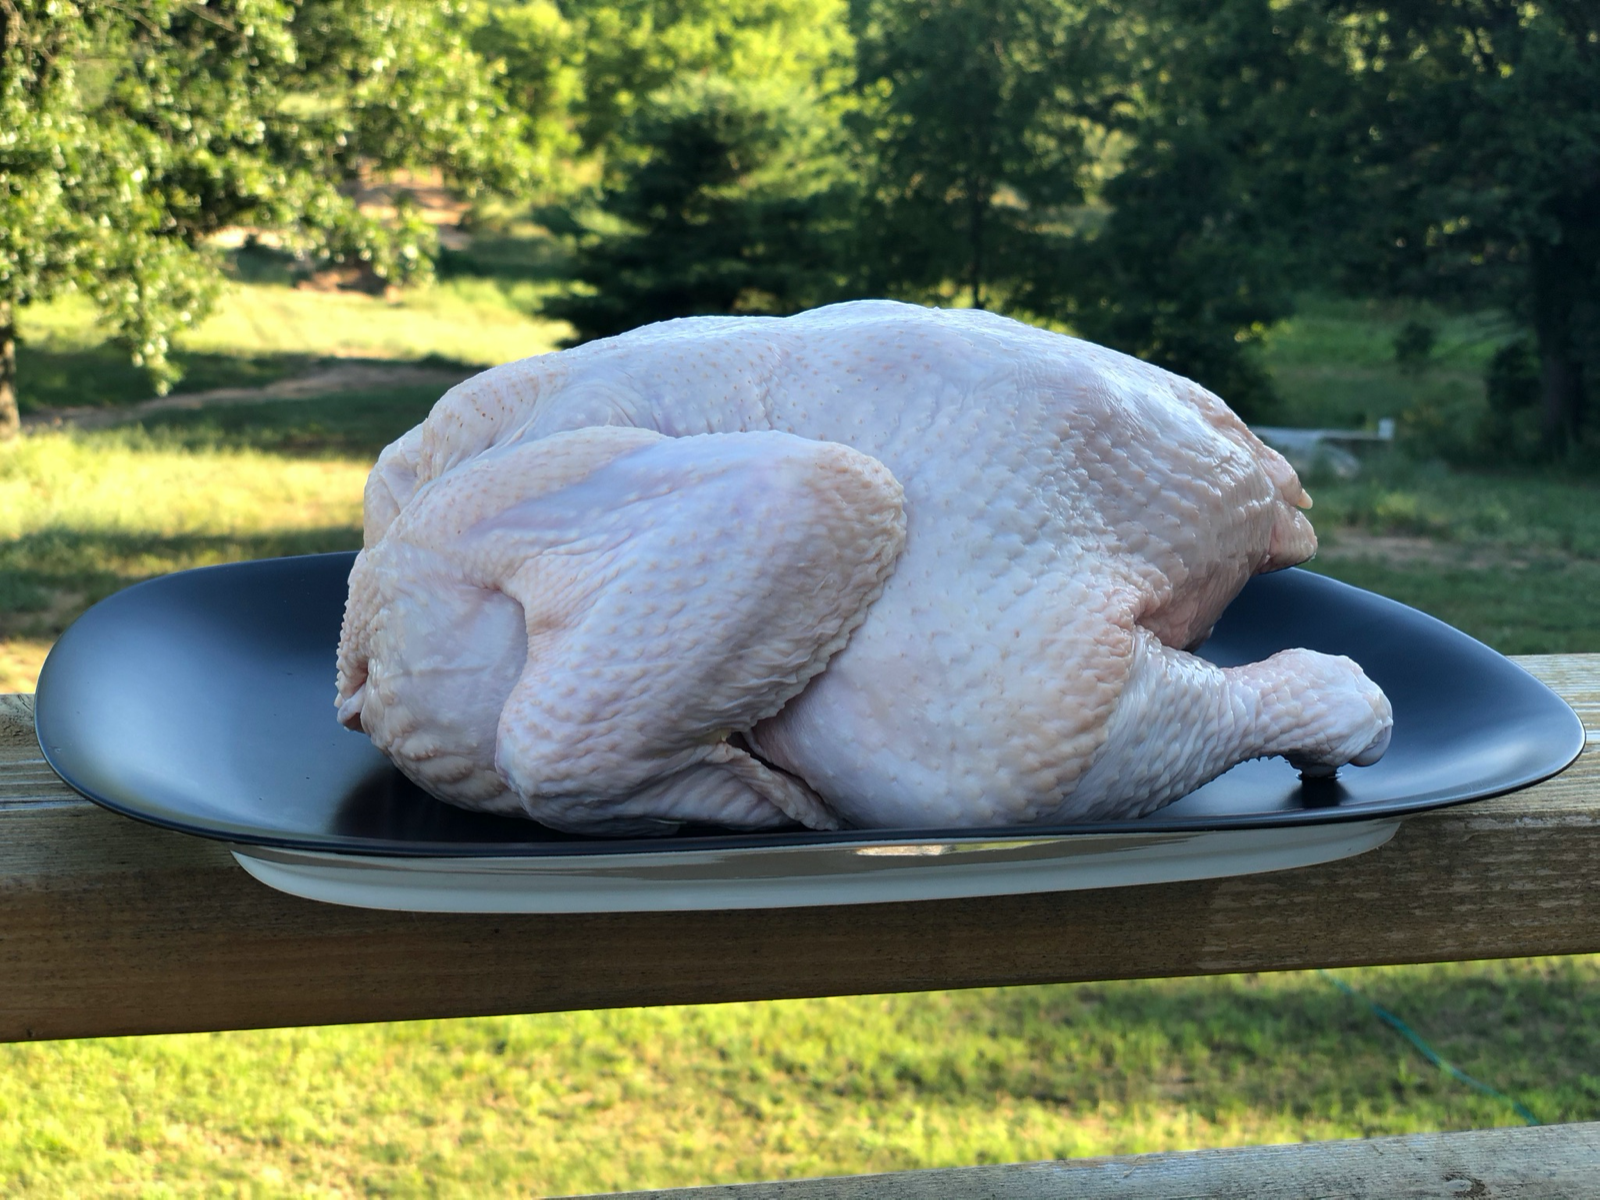 whole-chicken-34lbspasture-raised-nongmo-fed